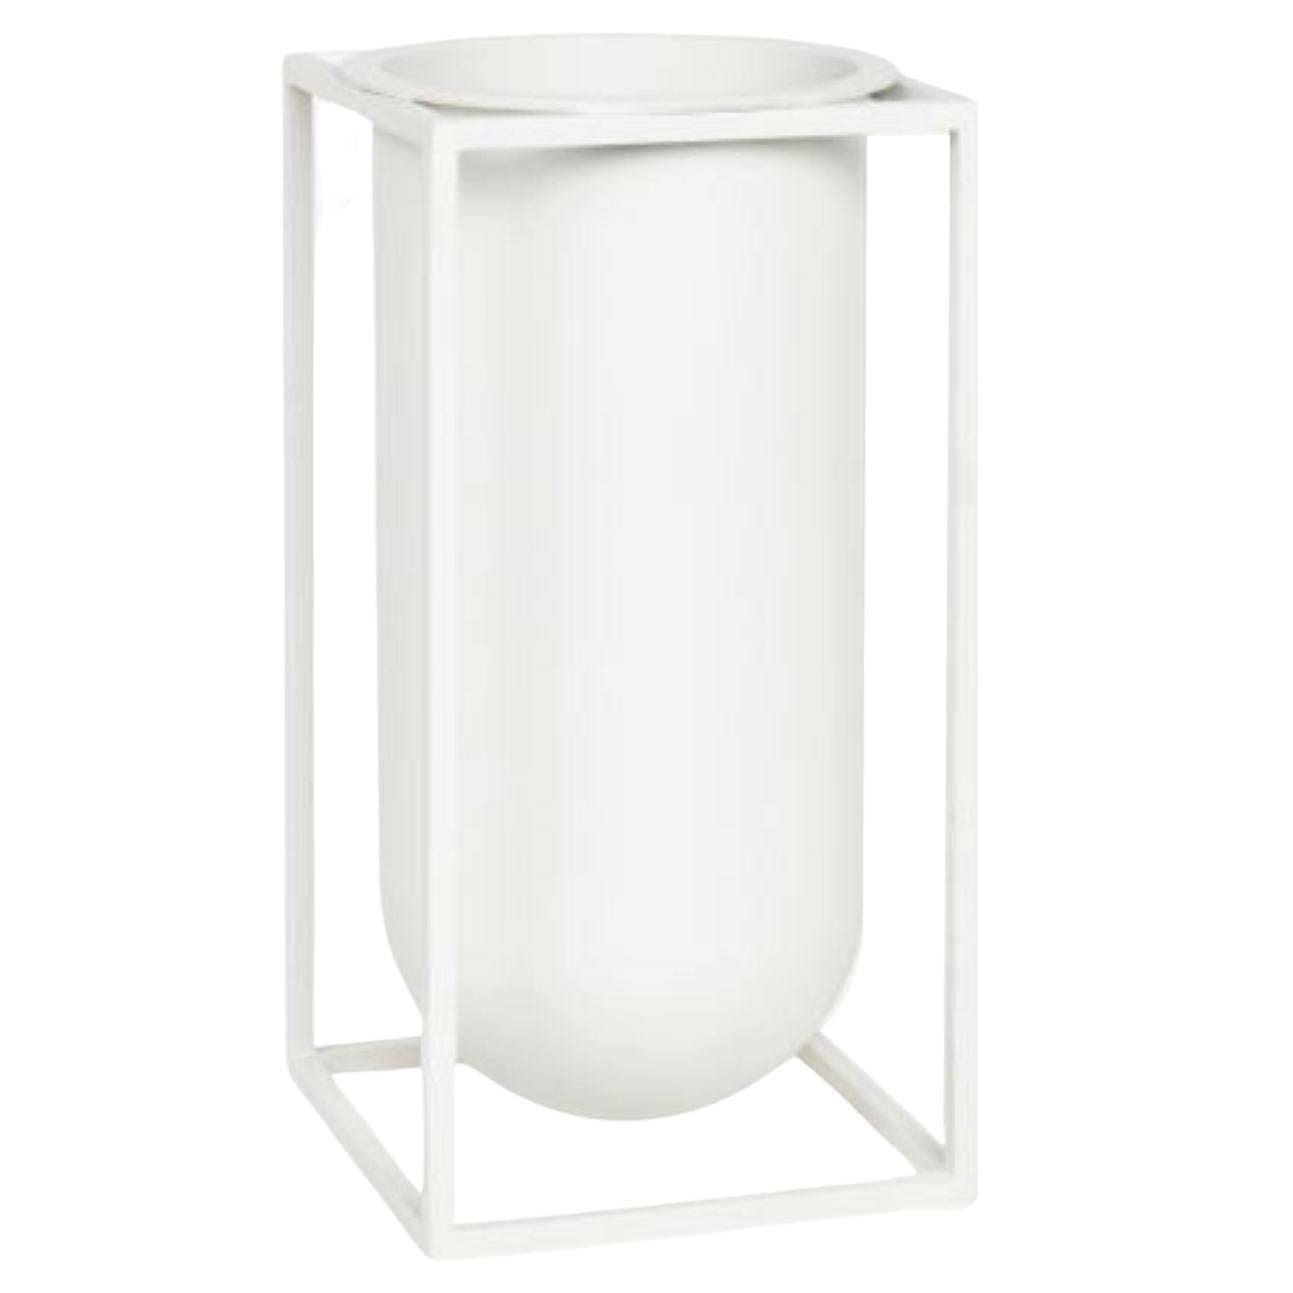 White Lolo Kubus Vase by Lassen